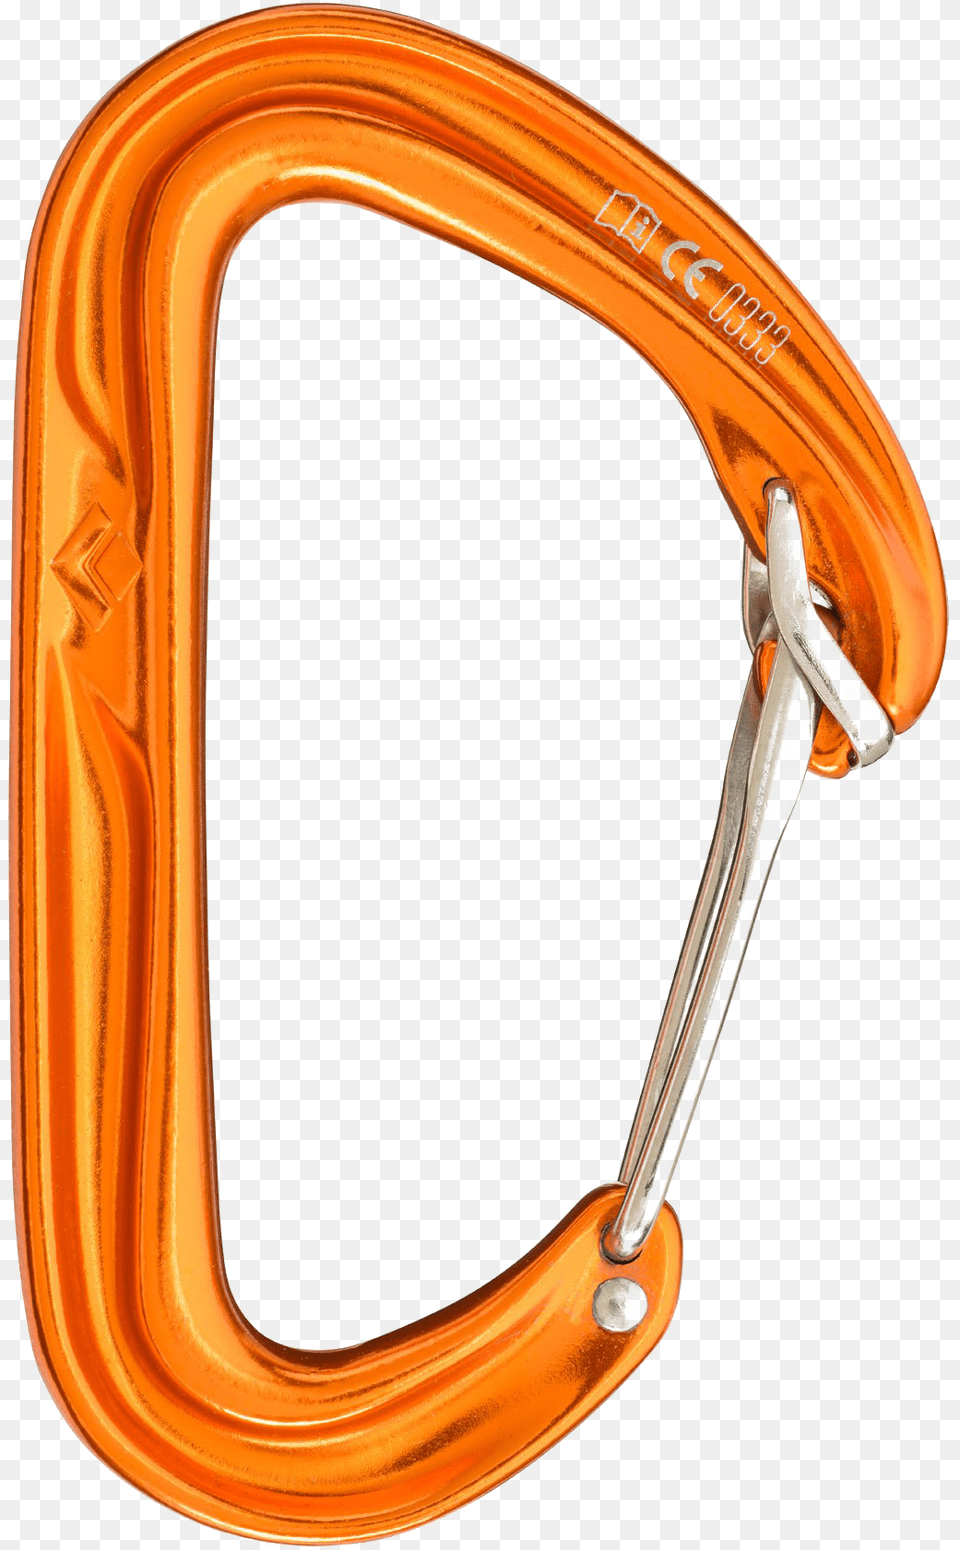 Orange Carabiner Transparent Background Play Black Diamond Hoodwire Carabiner, Electronics, Hardware, Device Free Png